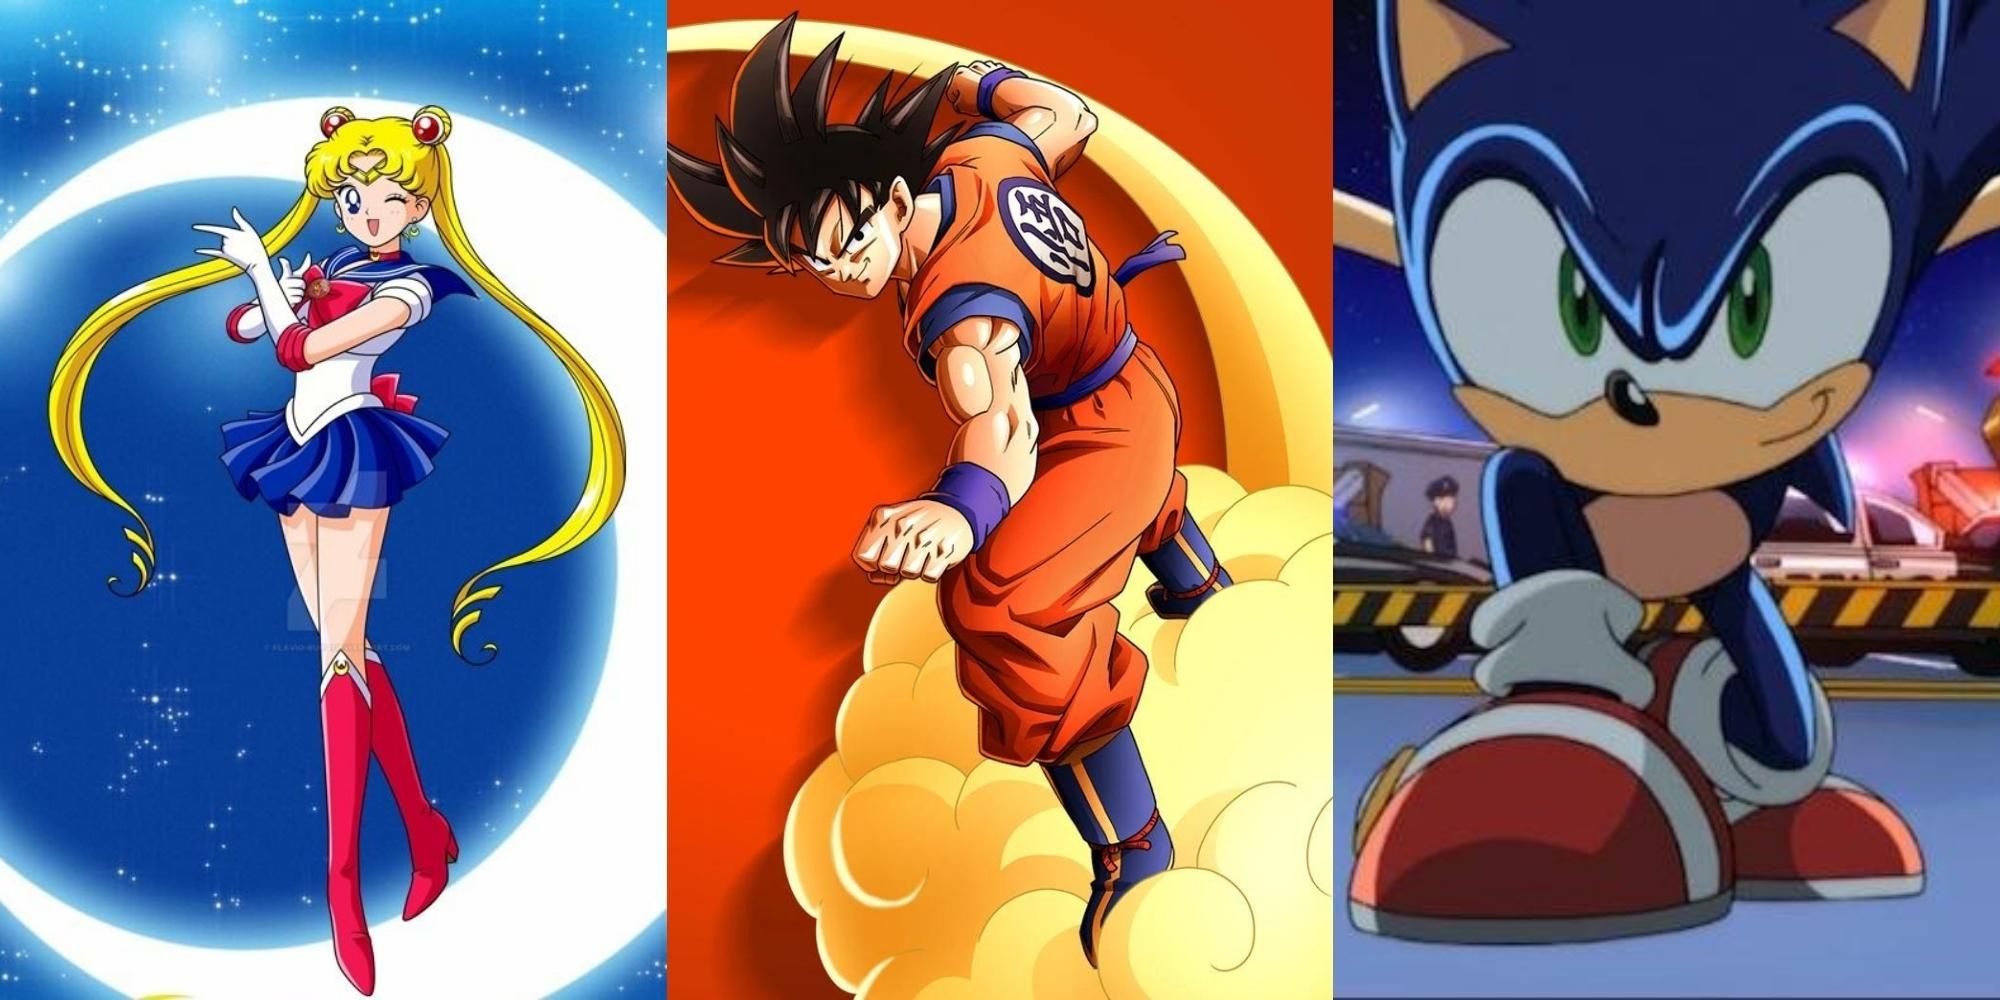 Usagi in Sailor Moon, Goku in Dragon Ball Z, Sonic in Sonic x